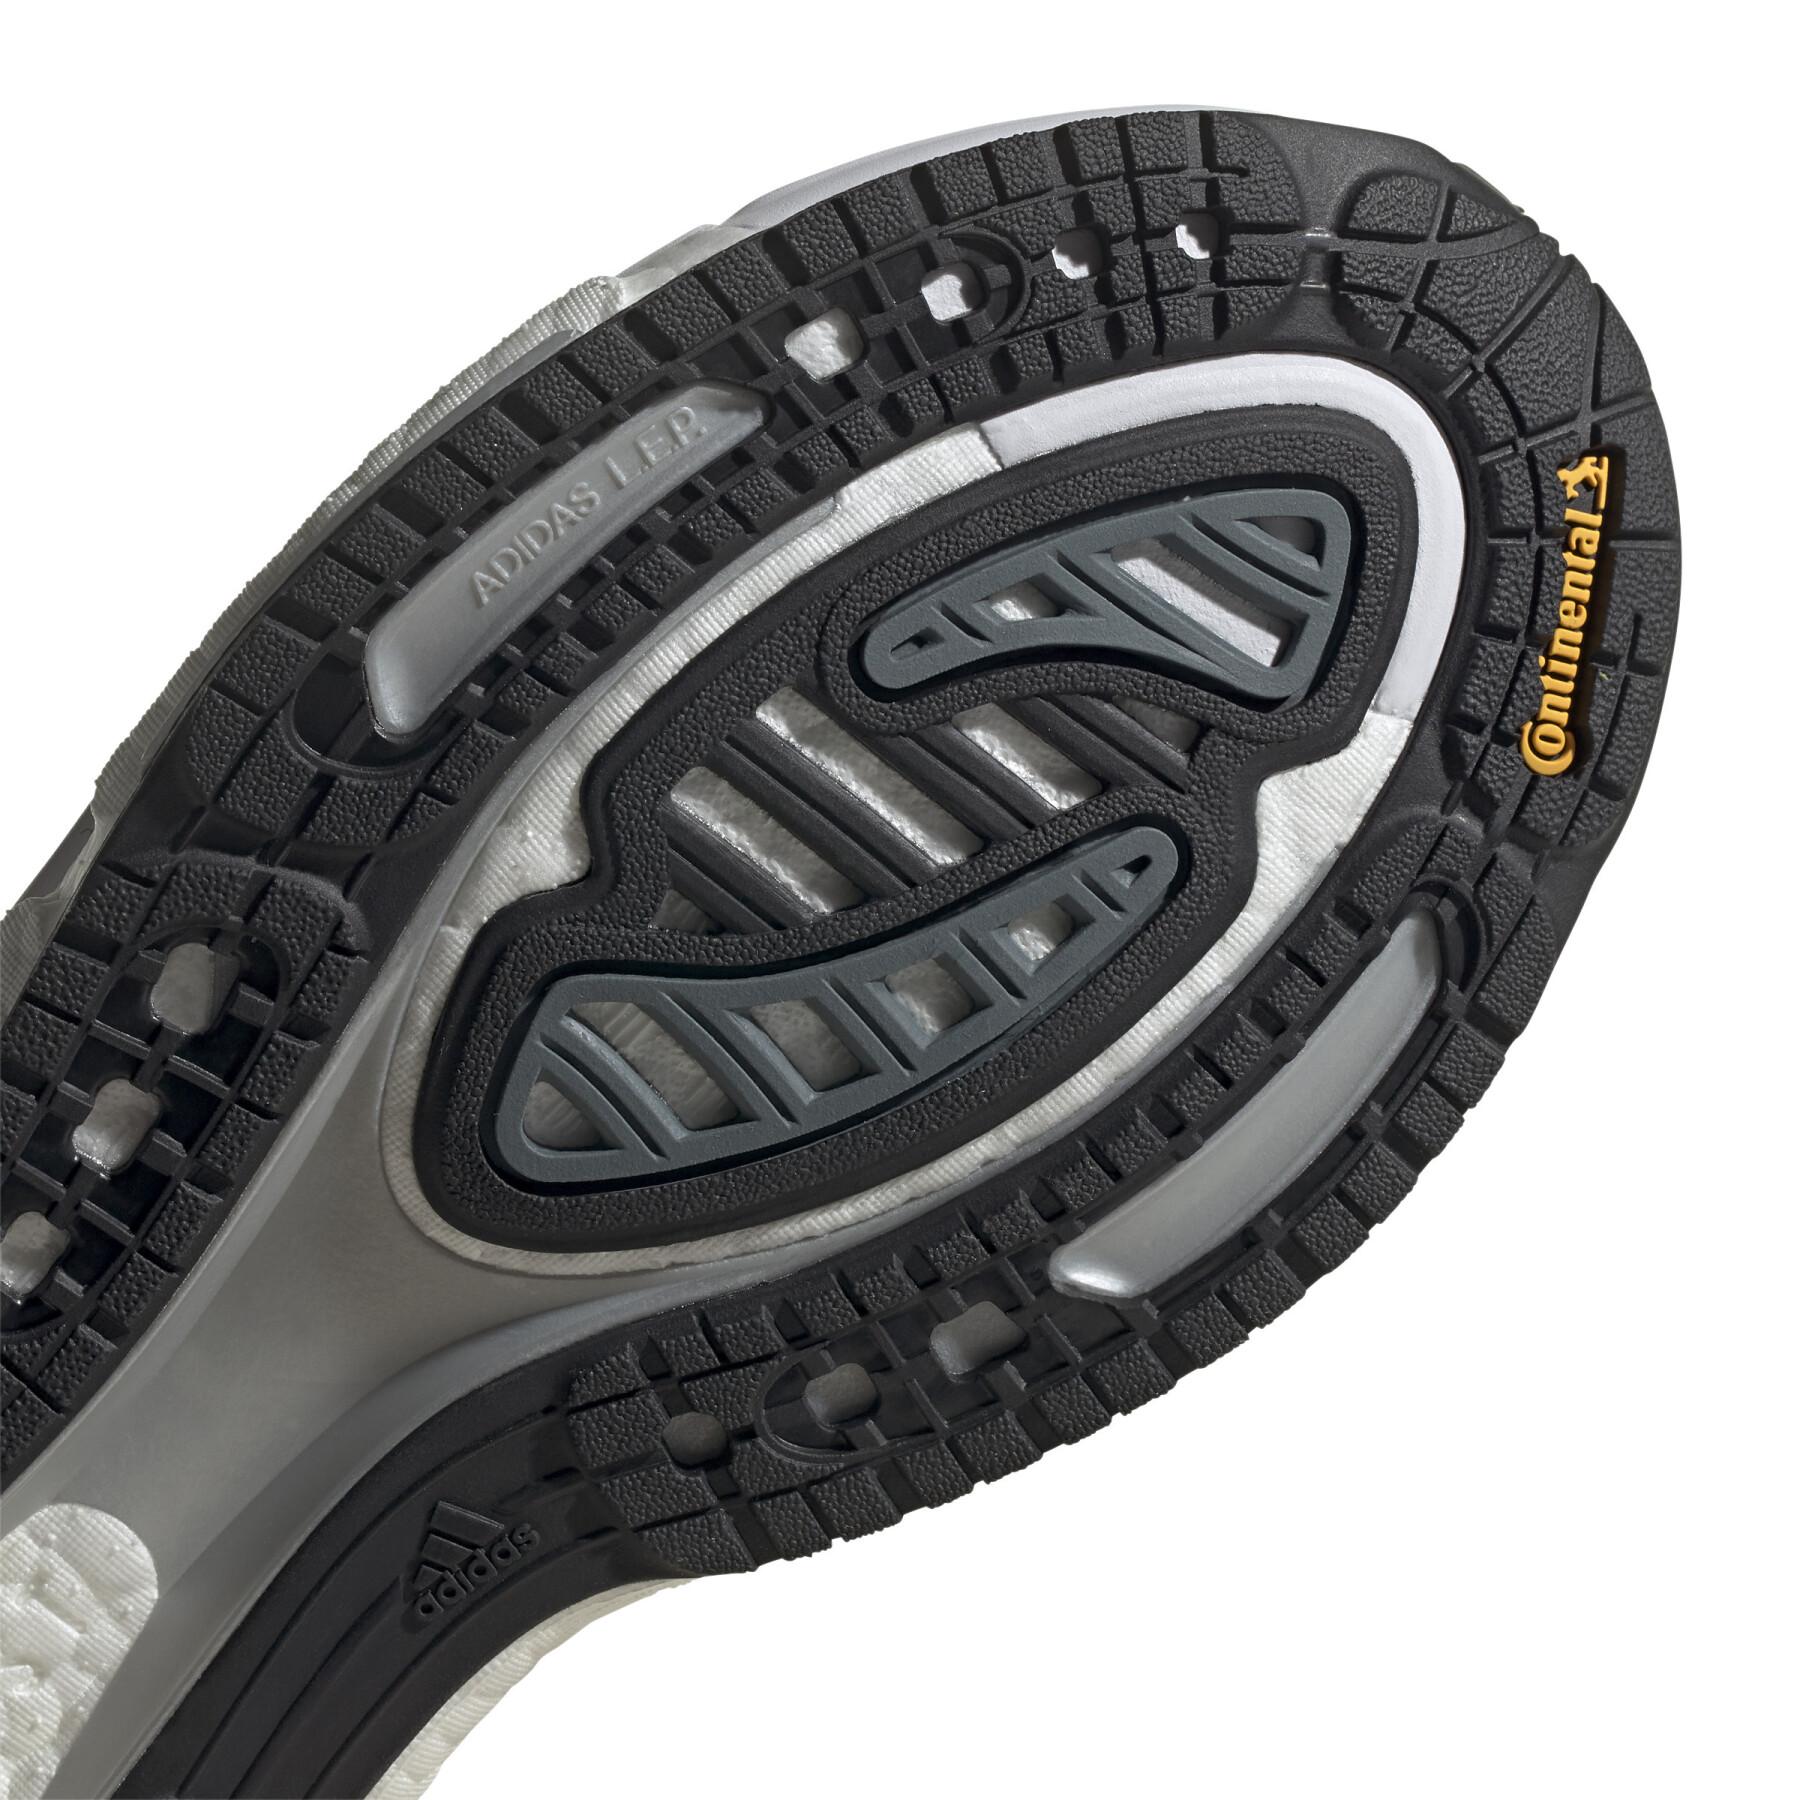 Zapatos Adidas solar boost 3M